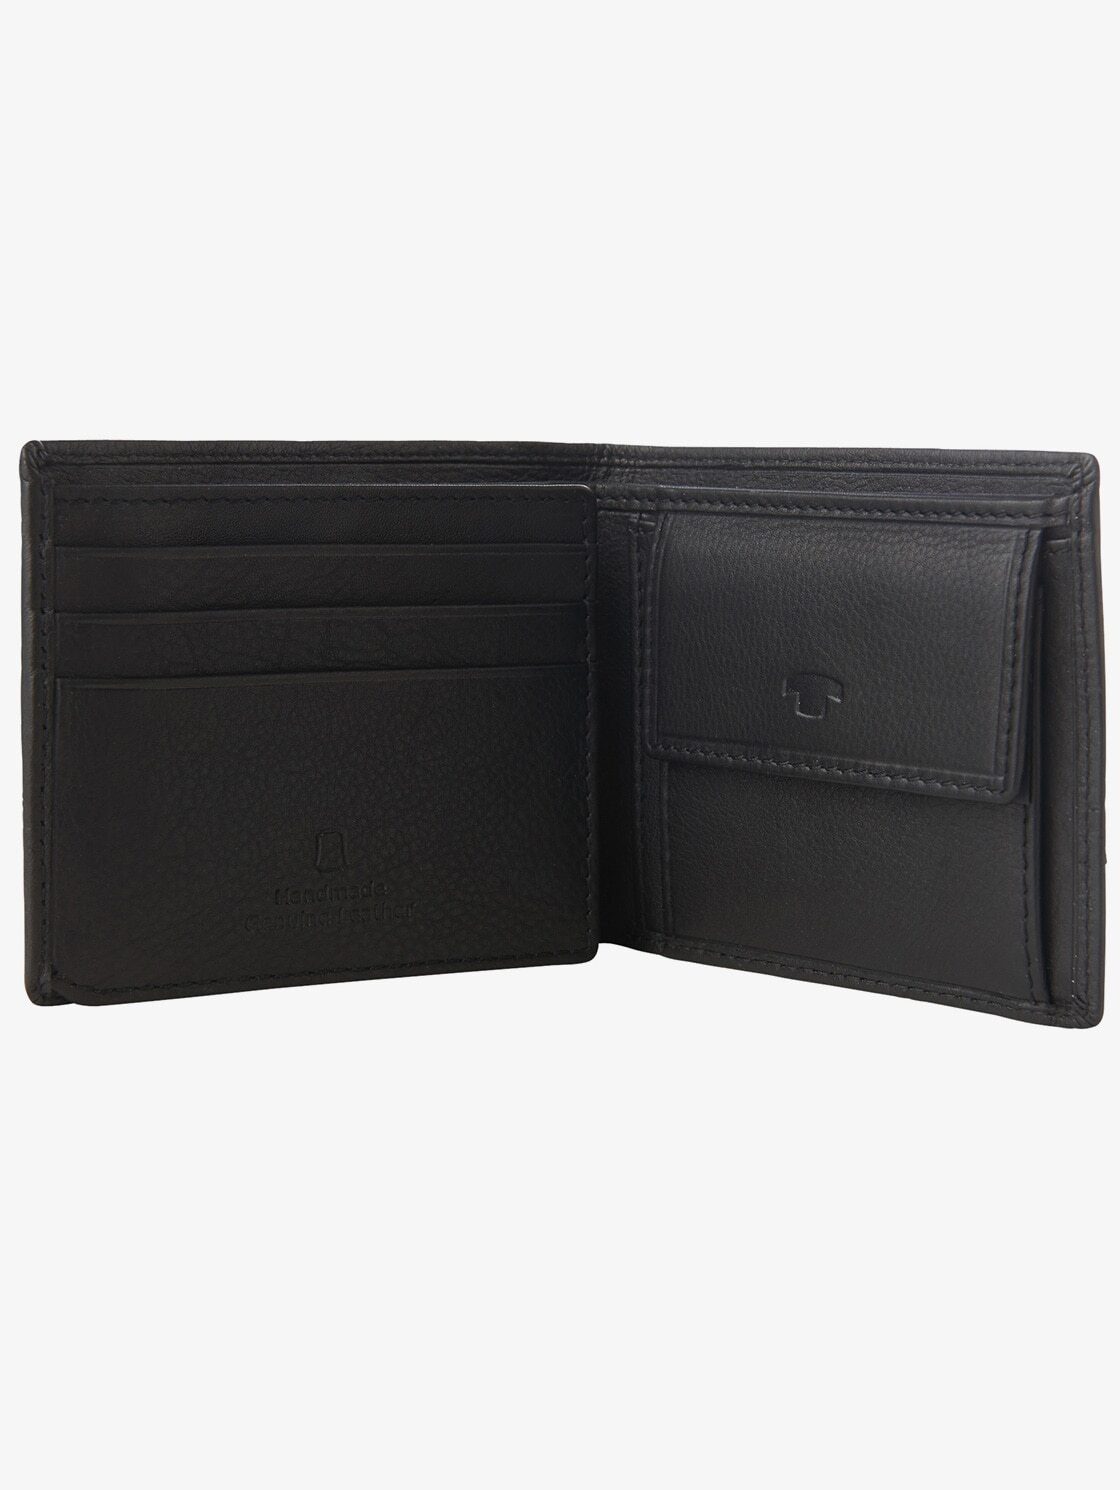 TOM TAILOR Geldbörse Portemonnaie black schwarz aus Leder 